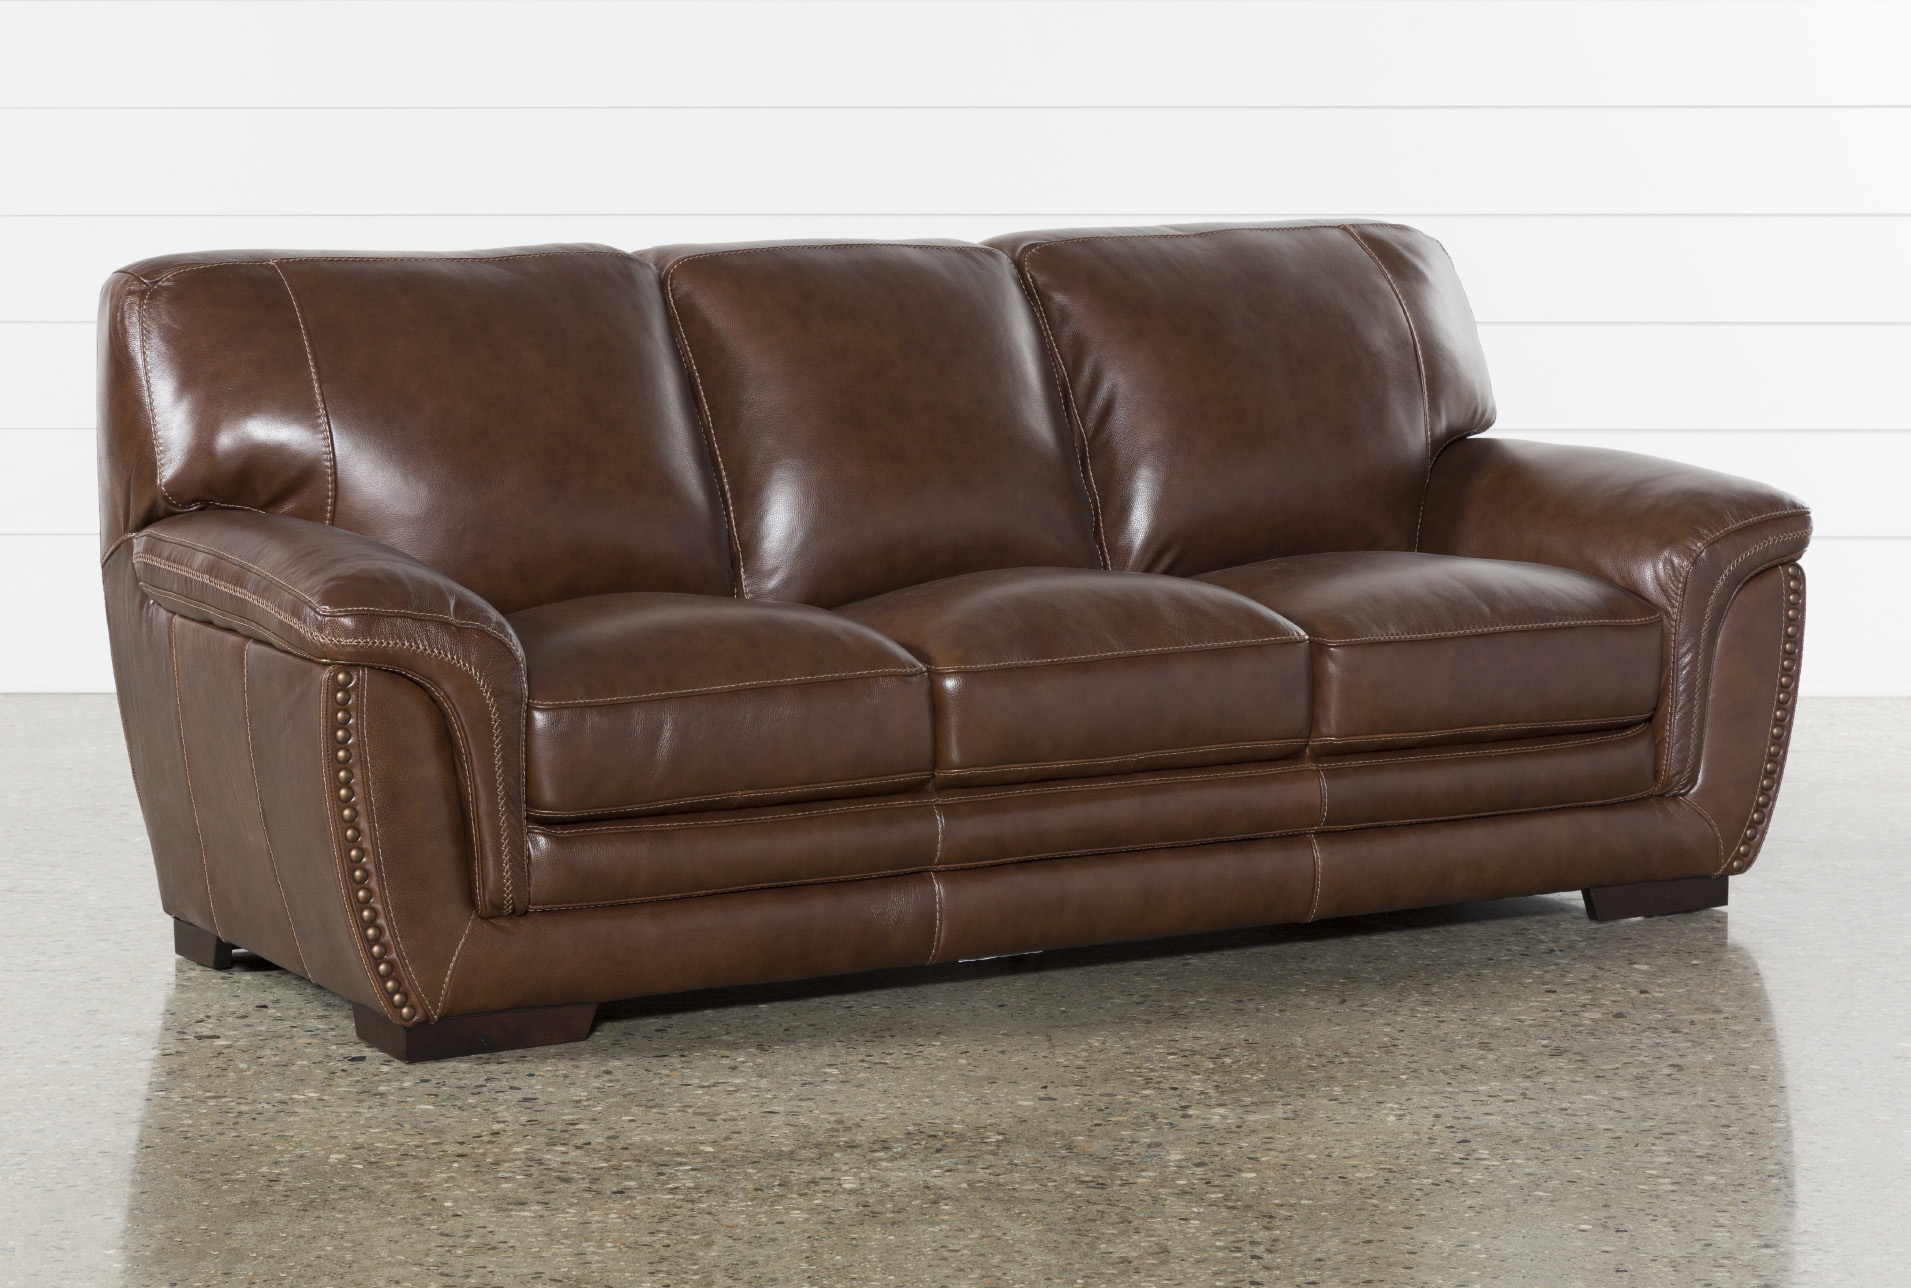 leather sofa sale in toronto kijiji